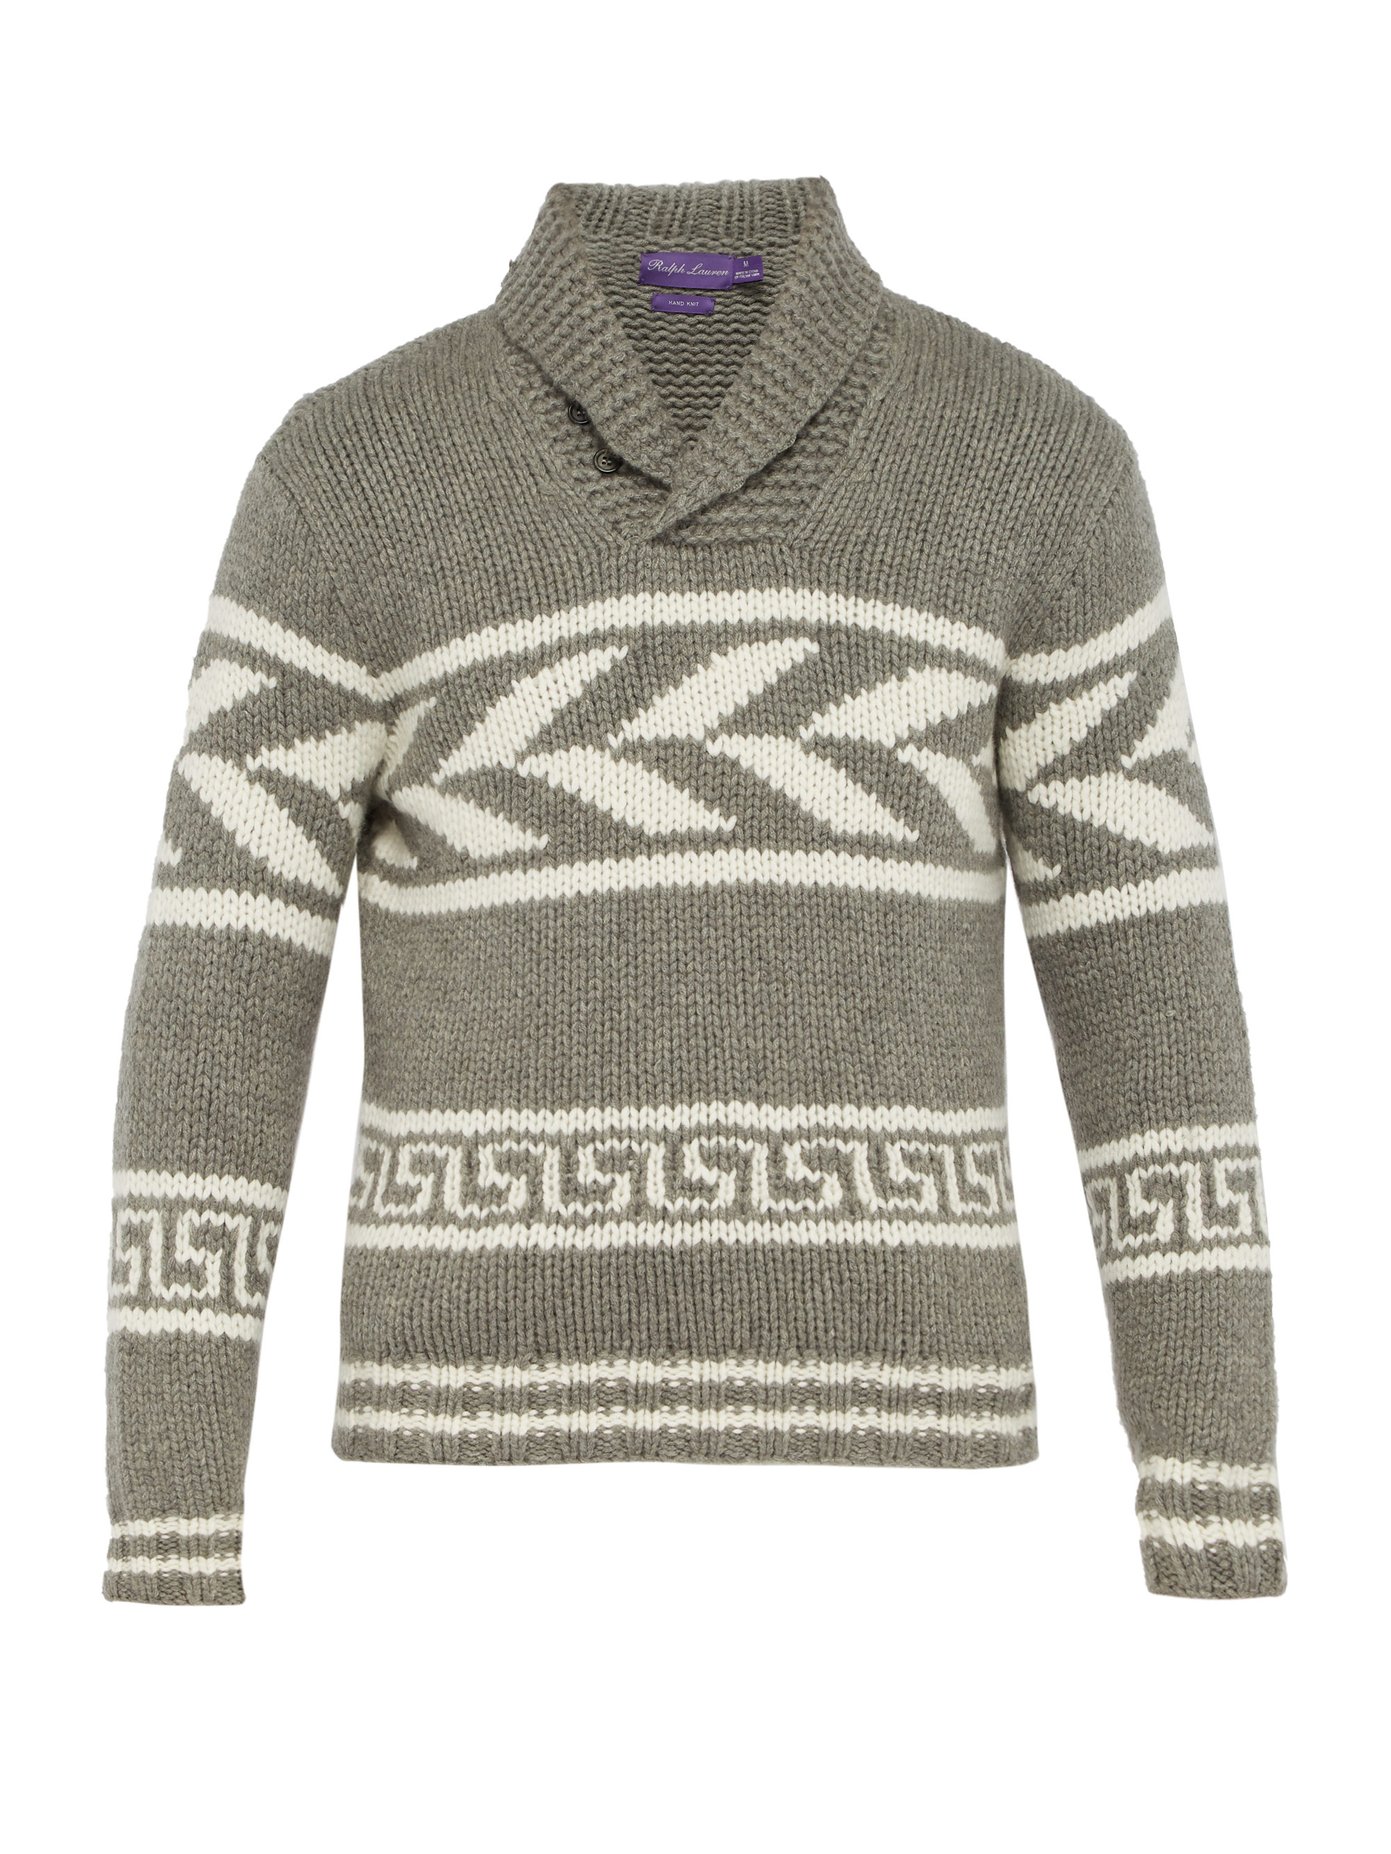 purple label sweater